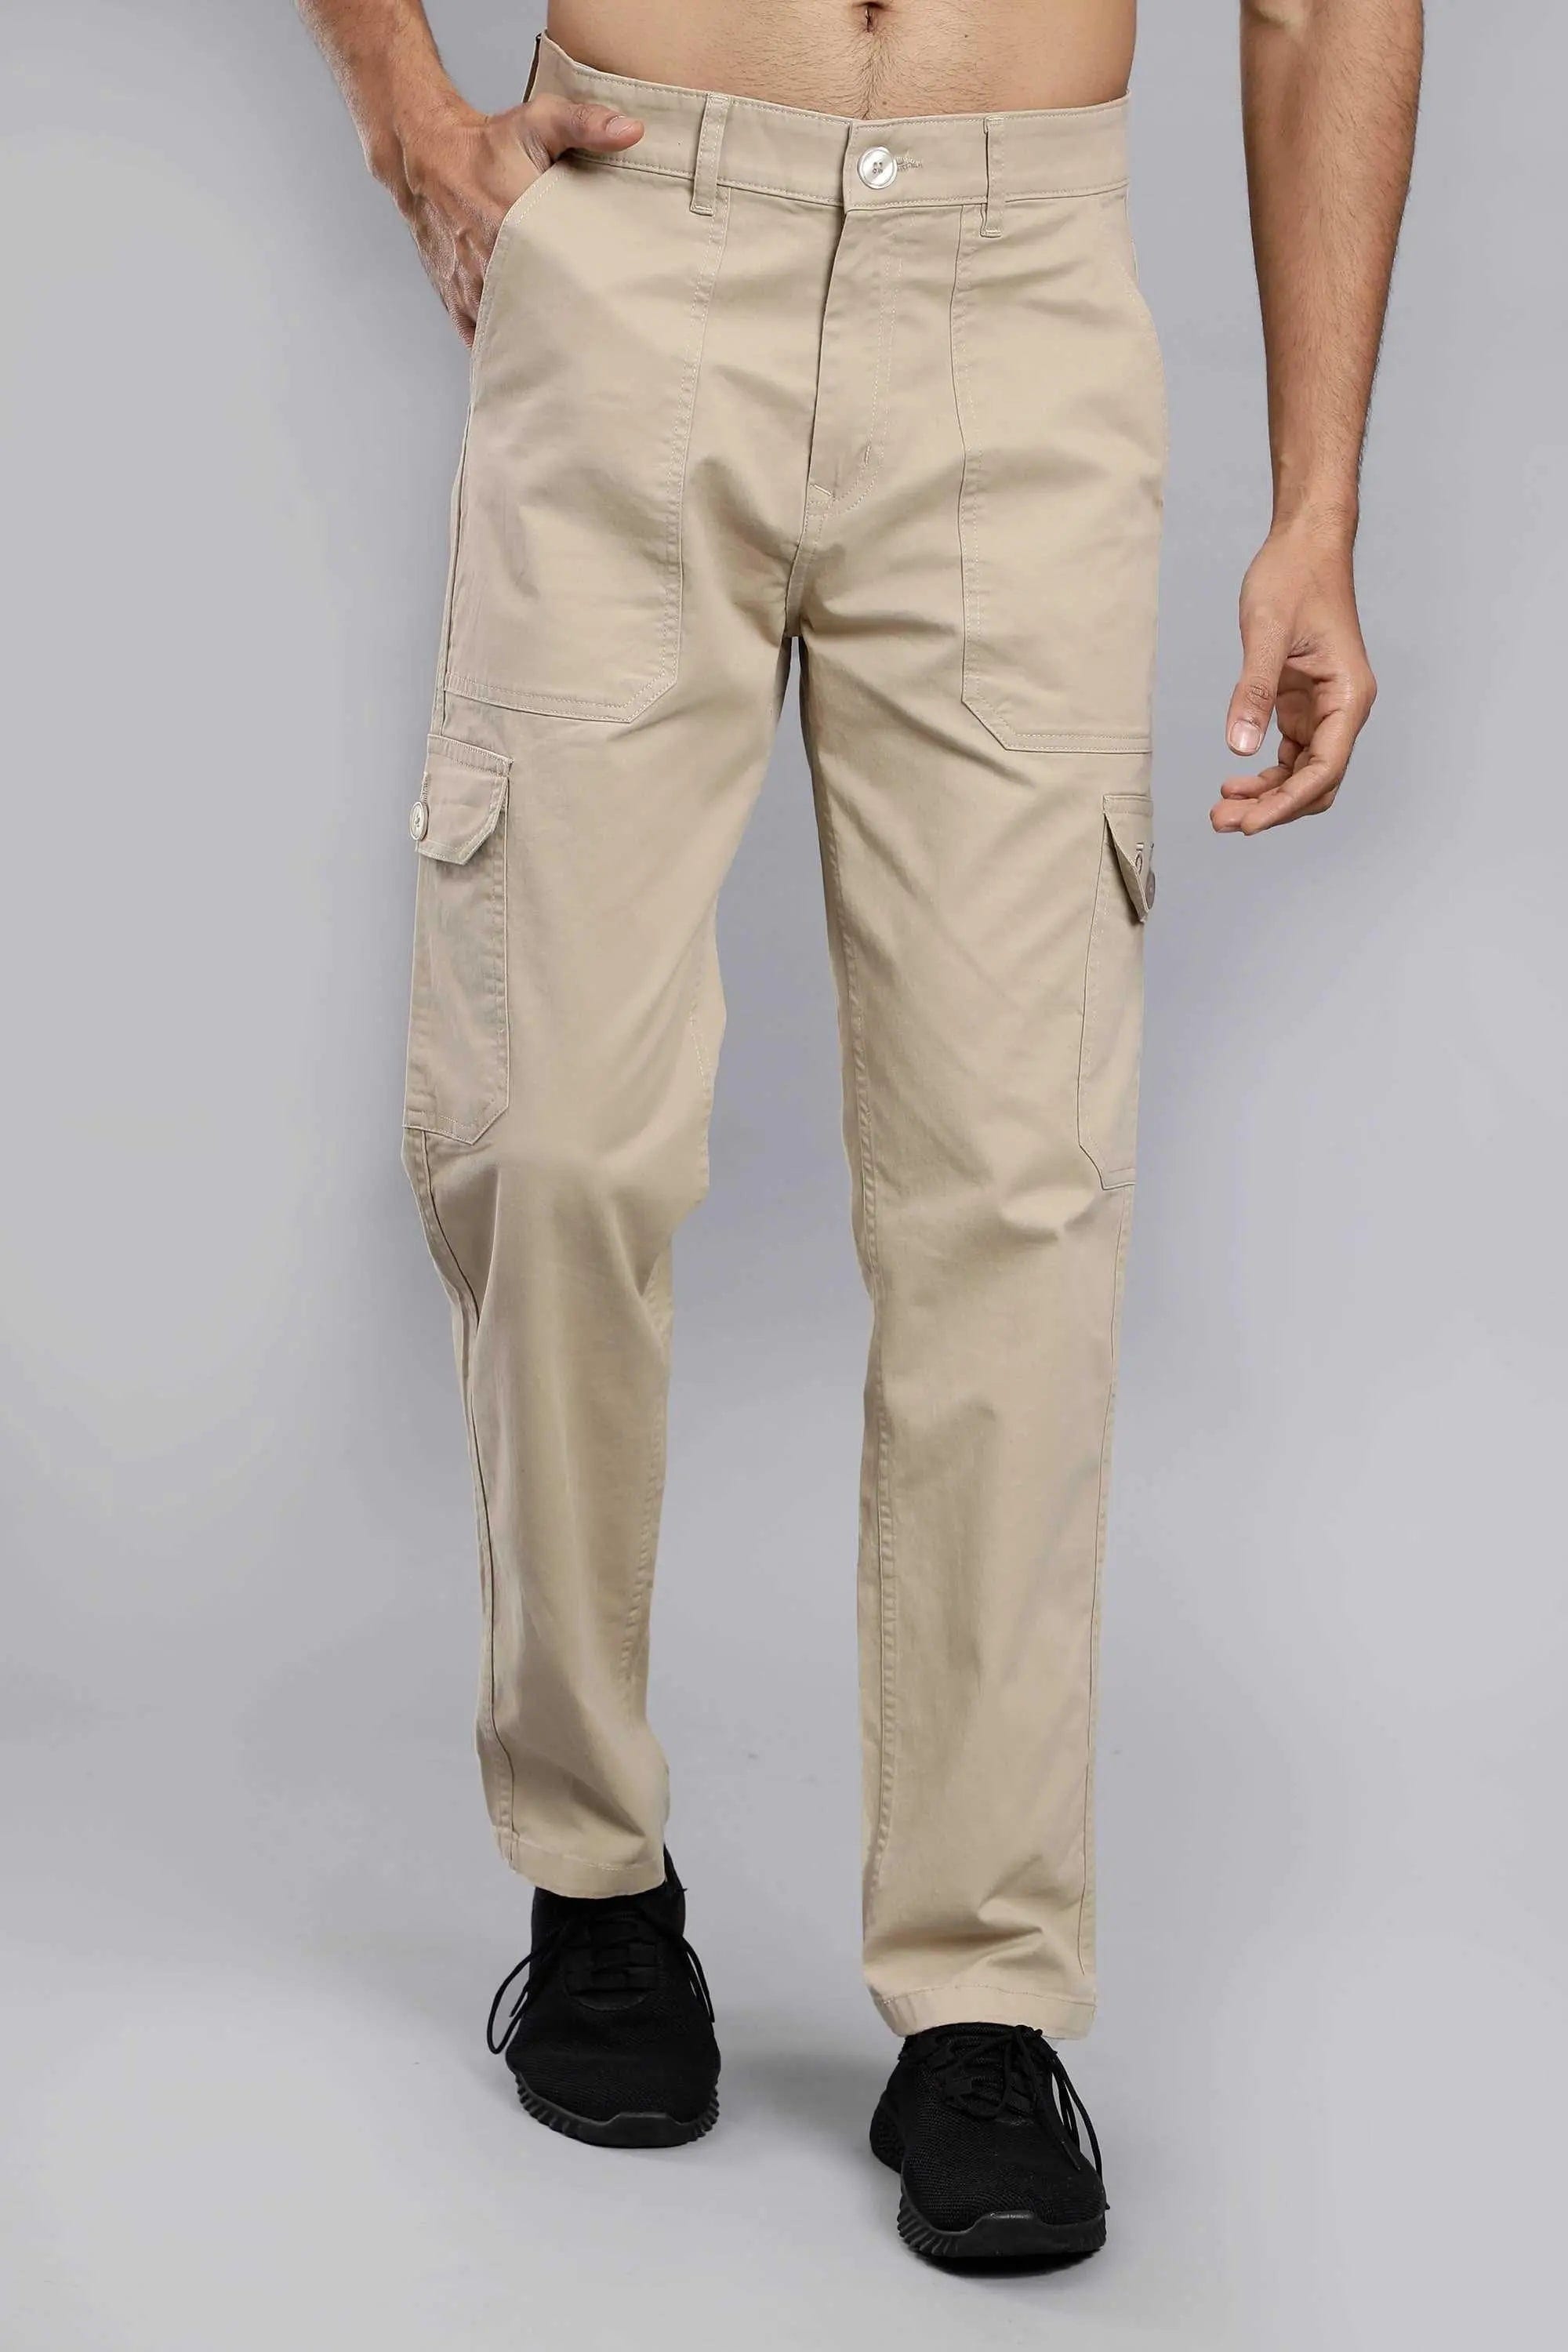 Men Trousers Long Pants Jogger Pants Sportswear Cargo Pants Loose Fashion  Solid | eBay